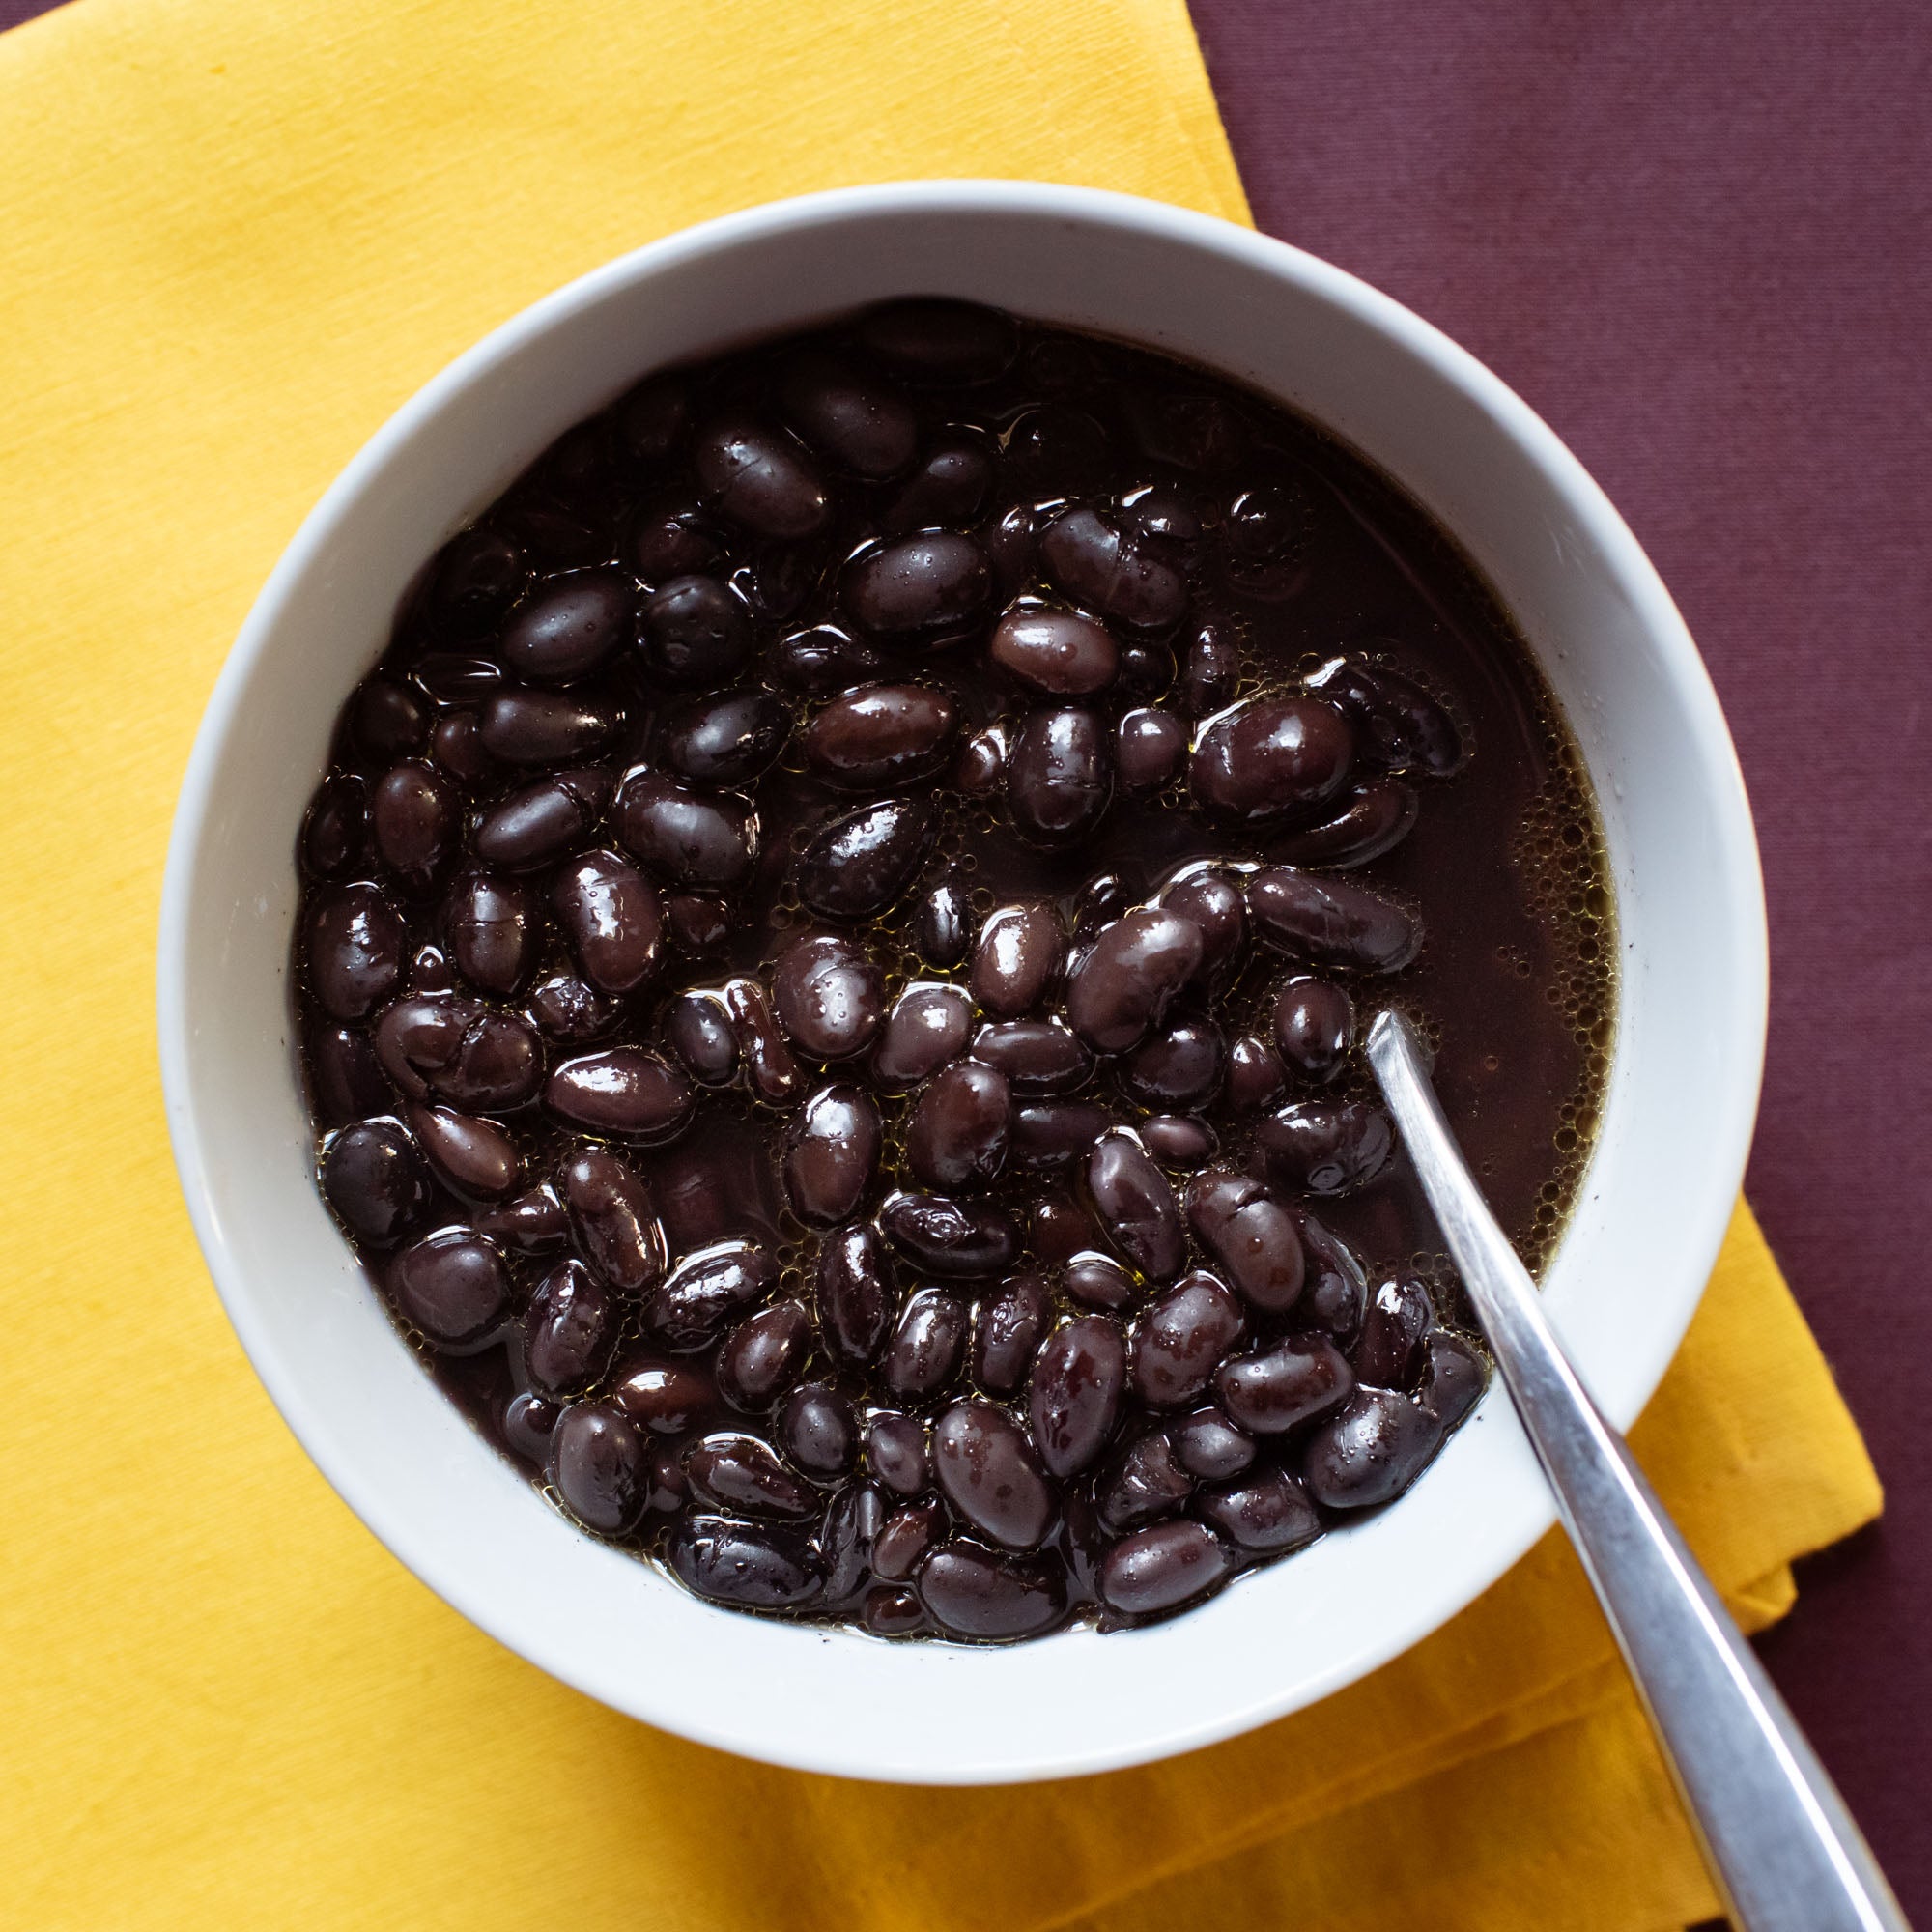 Primary Beans Chaparro black beans brothy